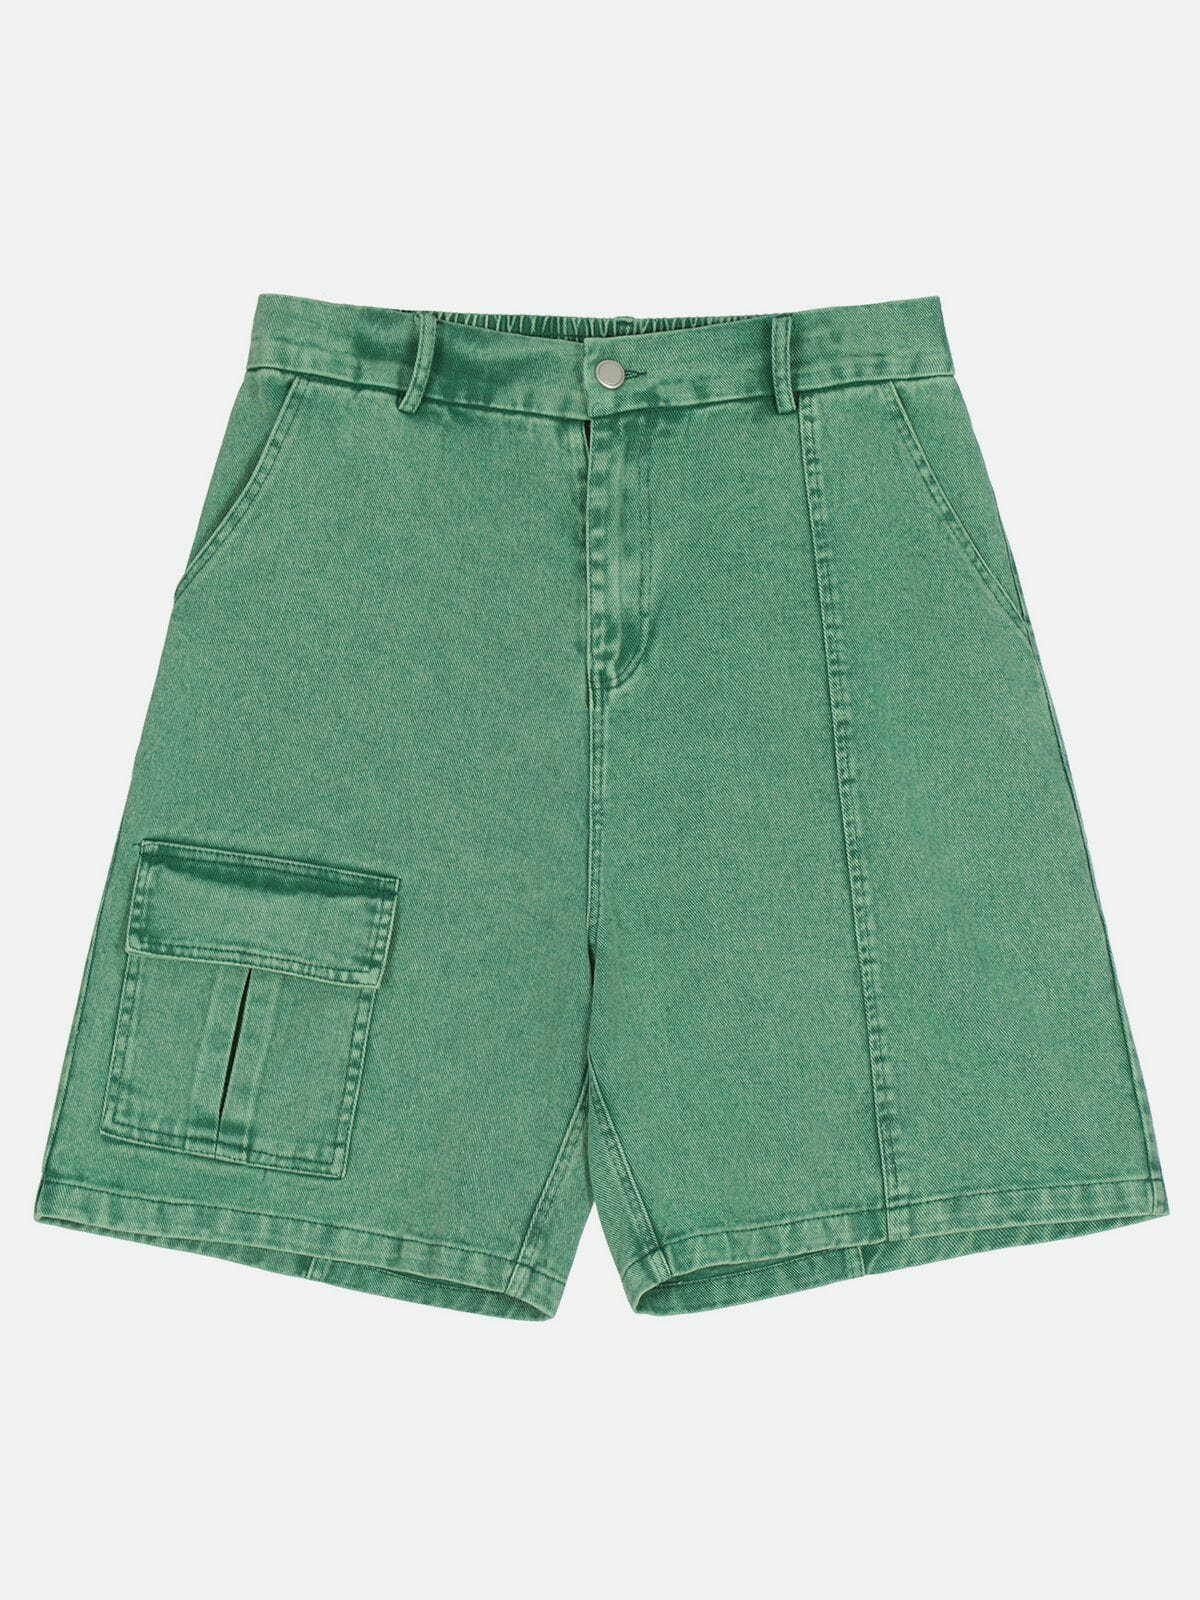 multipocket cargo shorts edgy & vintage streetwear 8032